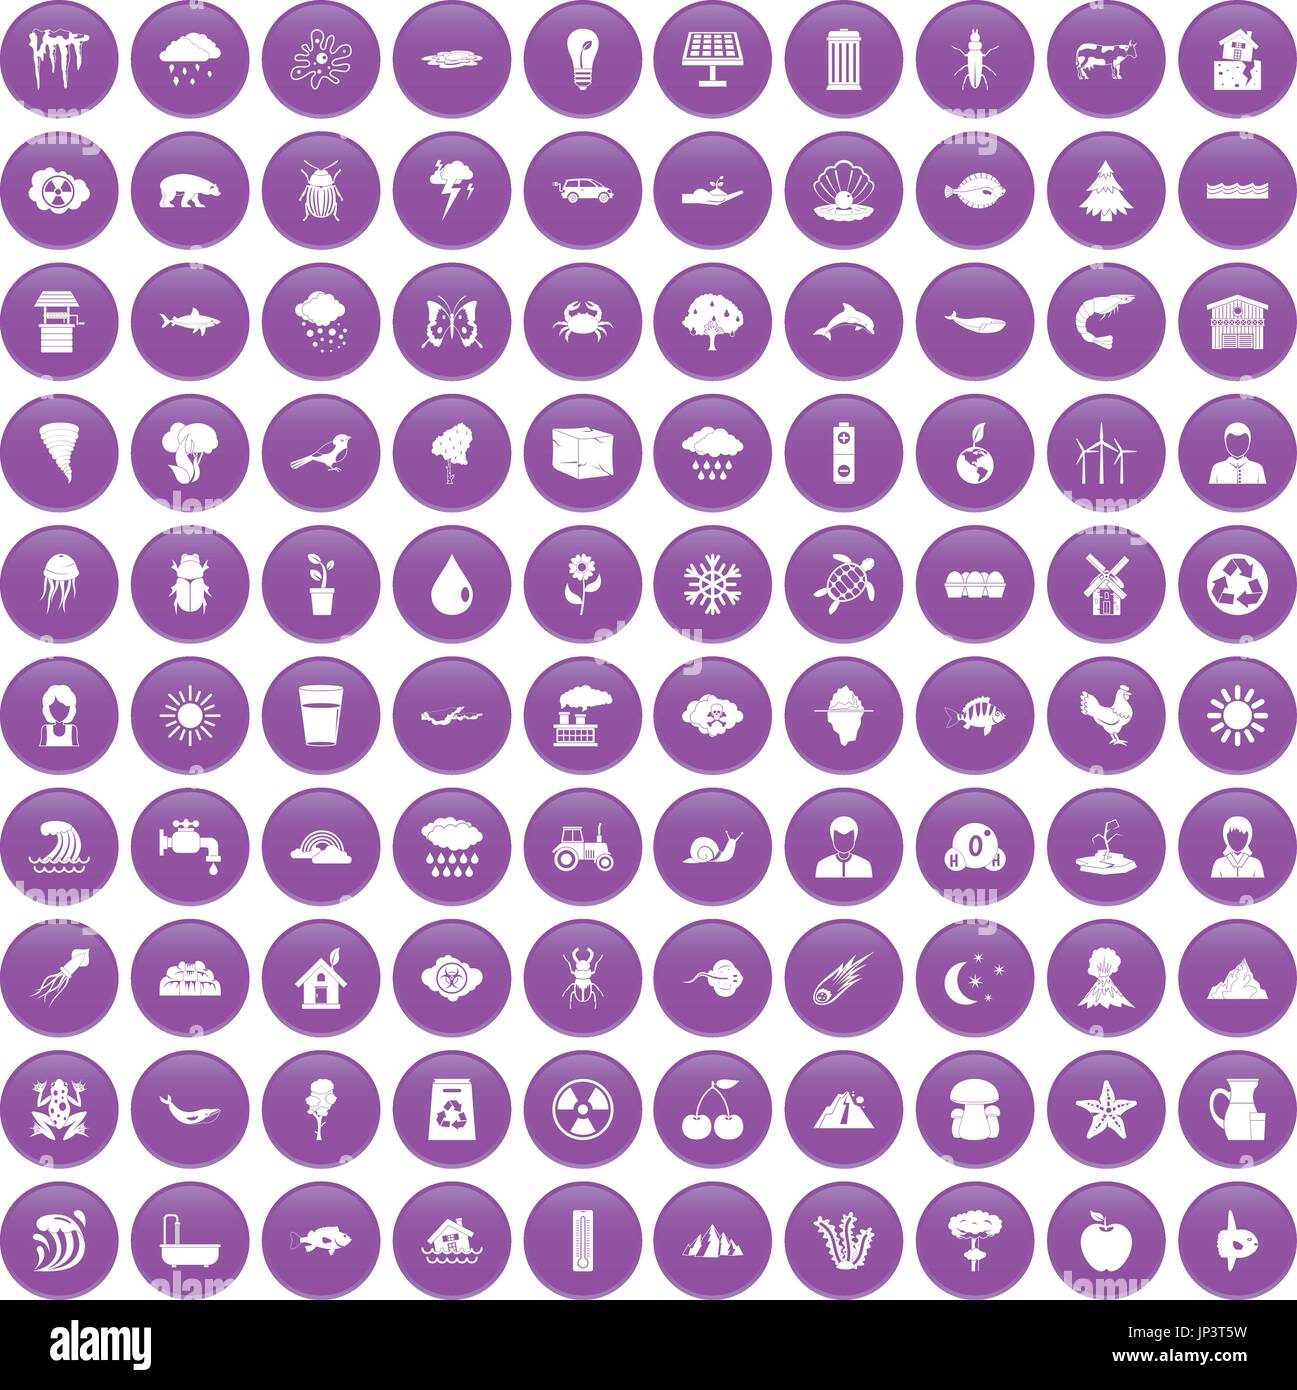 100 earth icons set purple Stock Vector